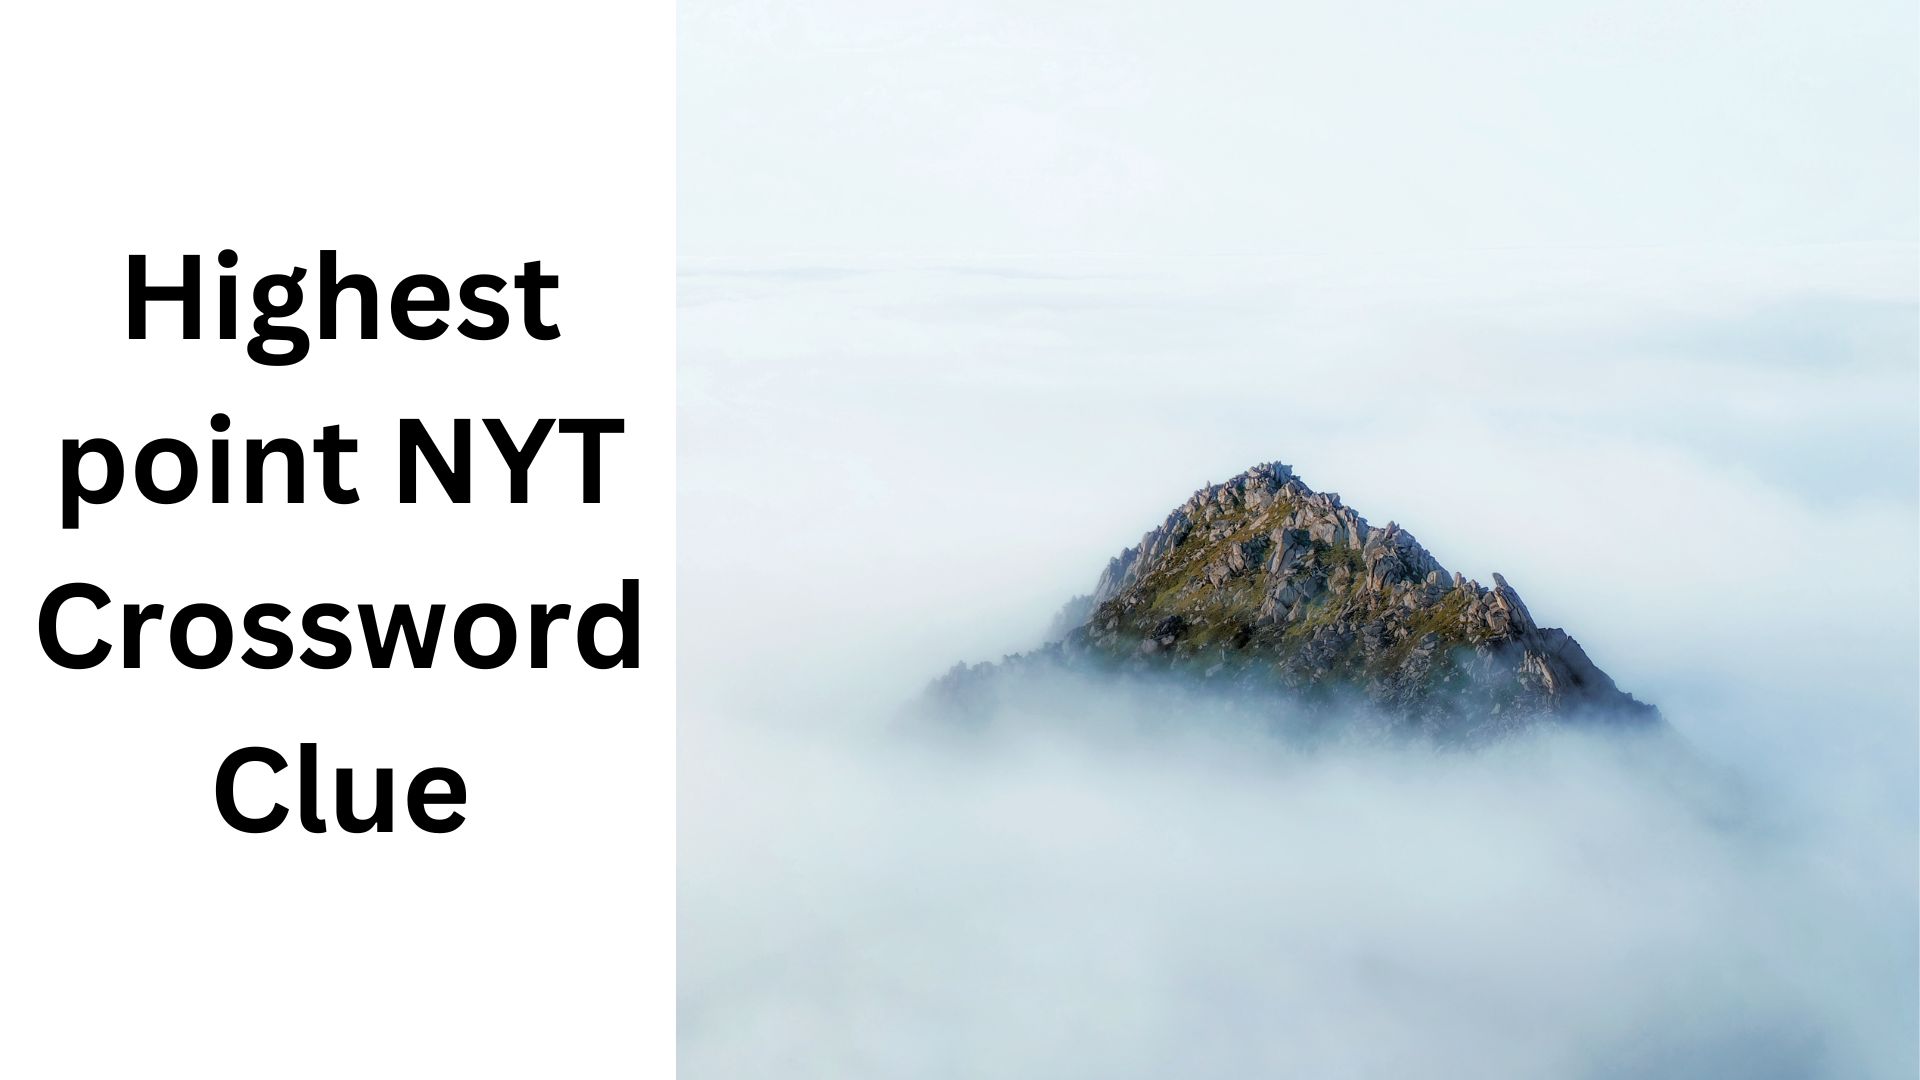 Highest point NYT Crossword Clue